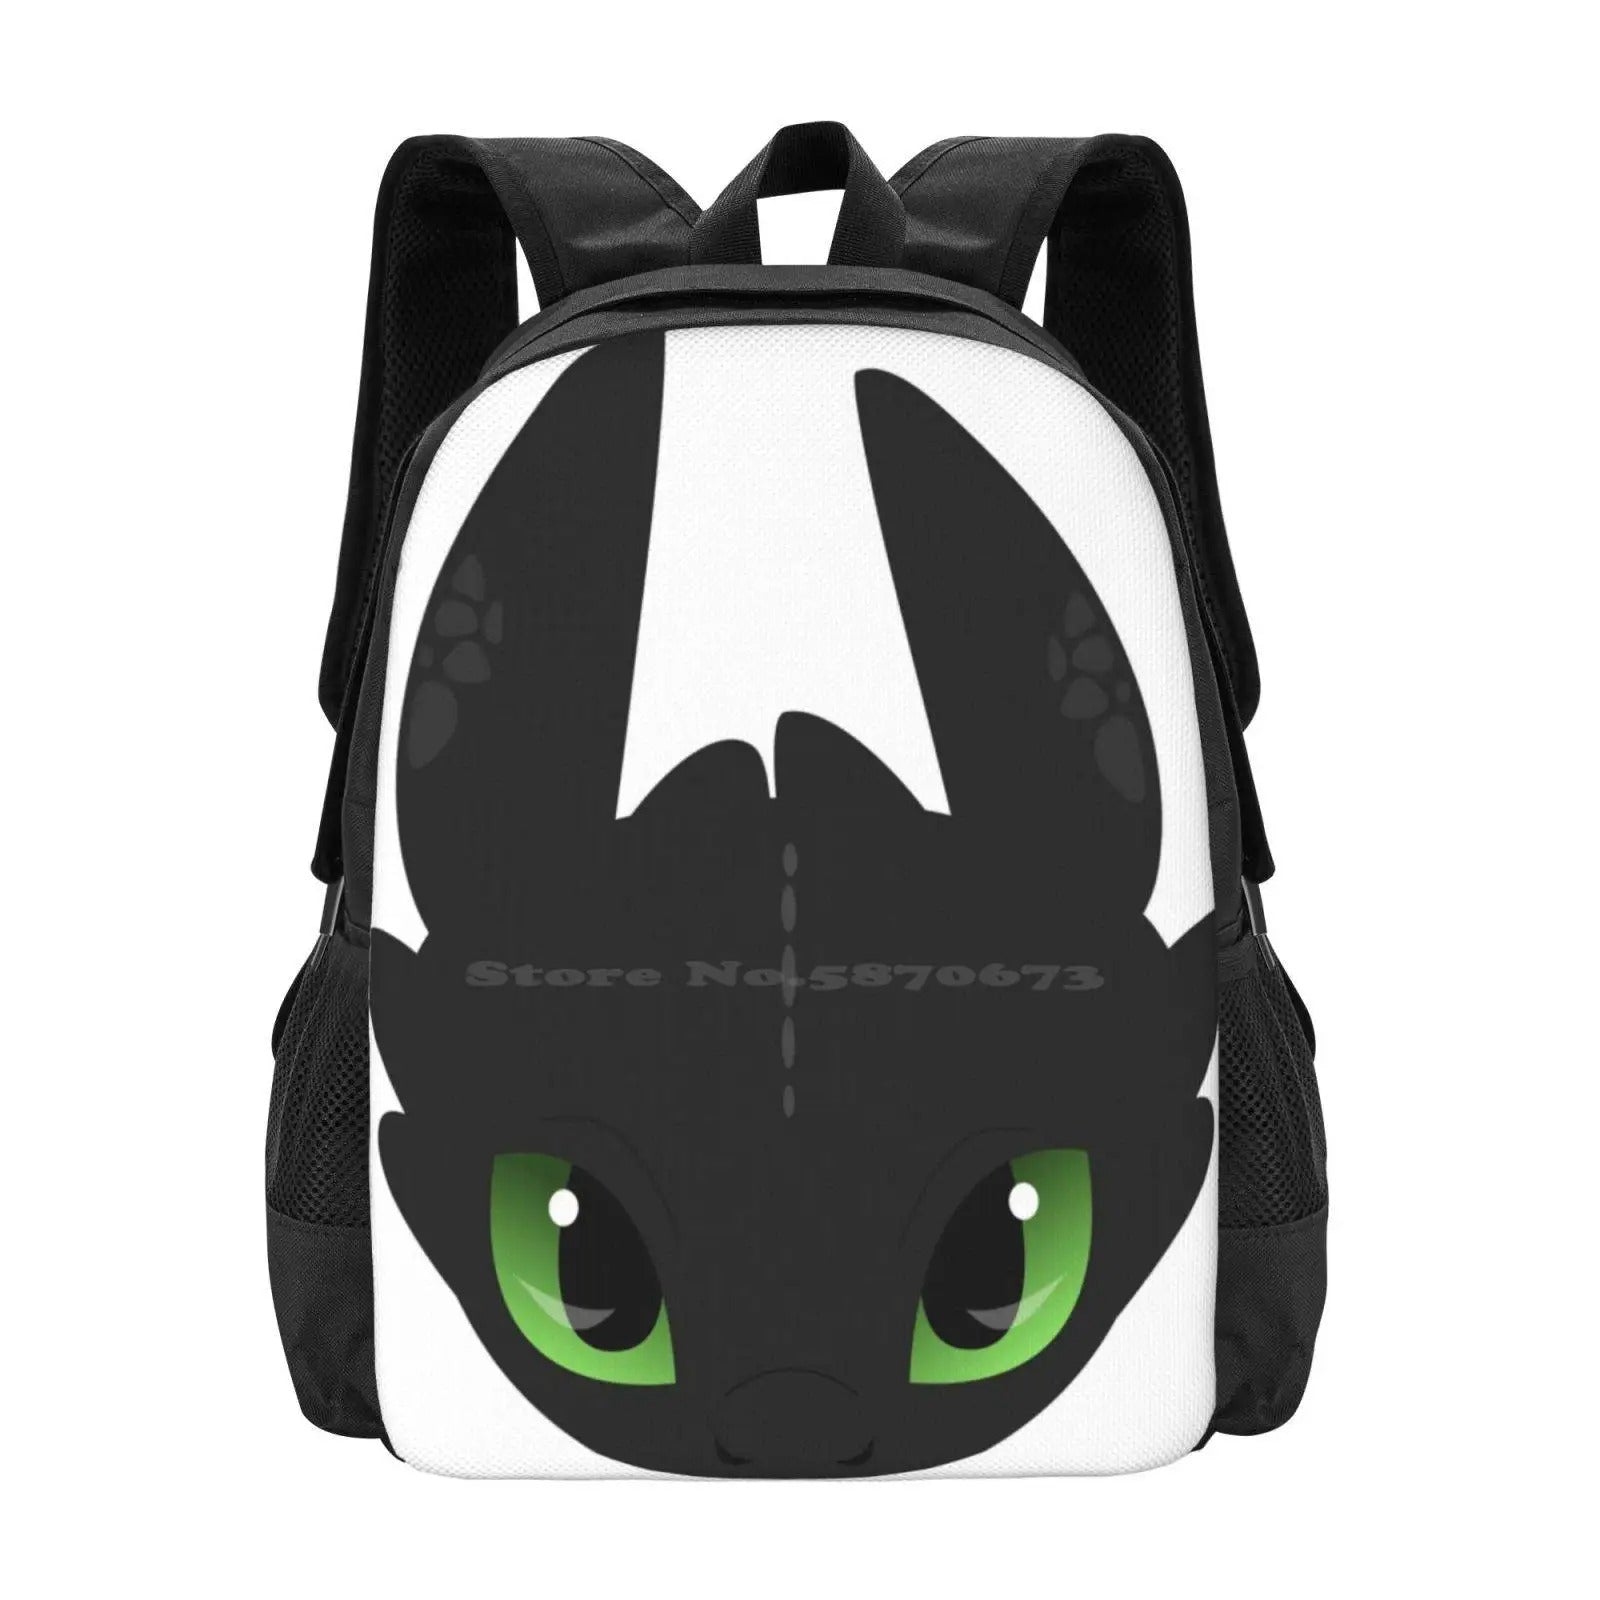 Realistic Dragon Backpack - Backpack - Black